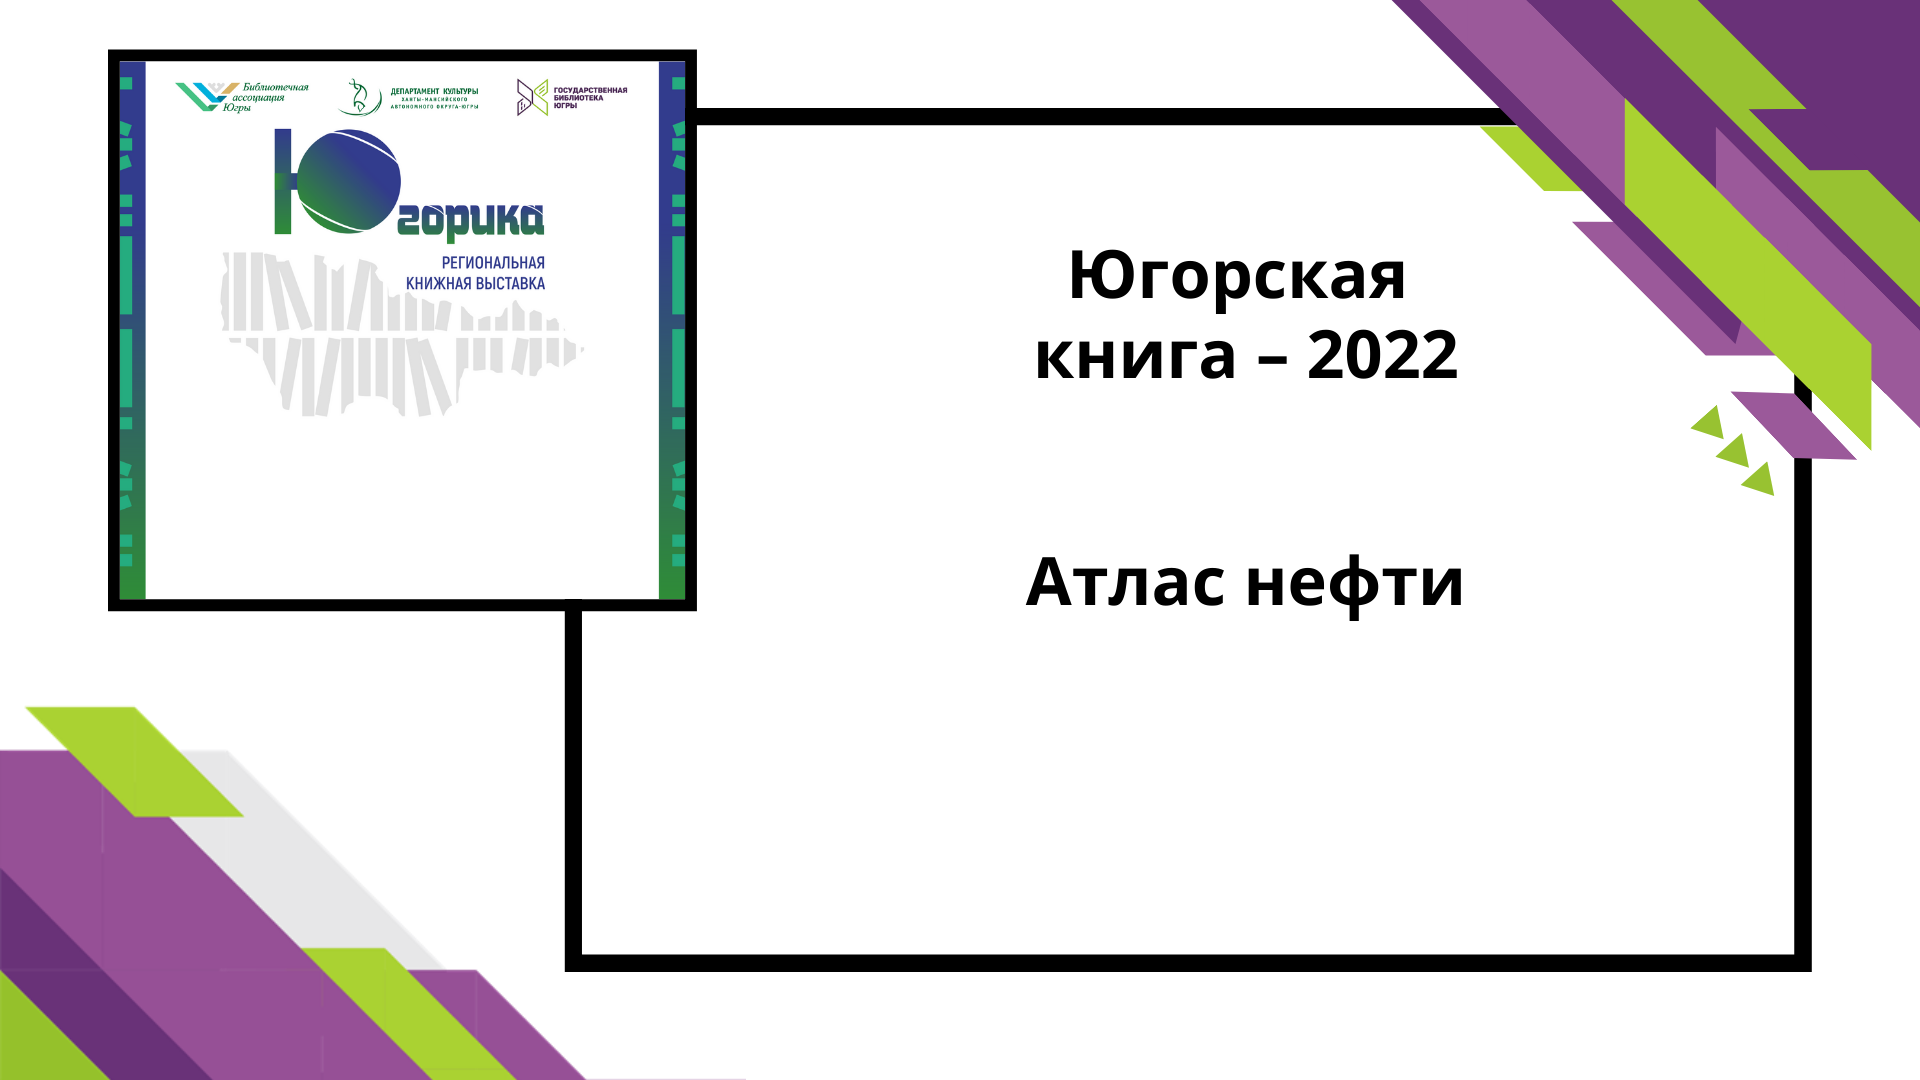 Югорская книга-2022 Атлас нефти.mp4